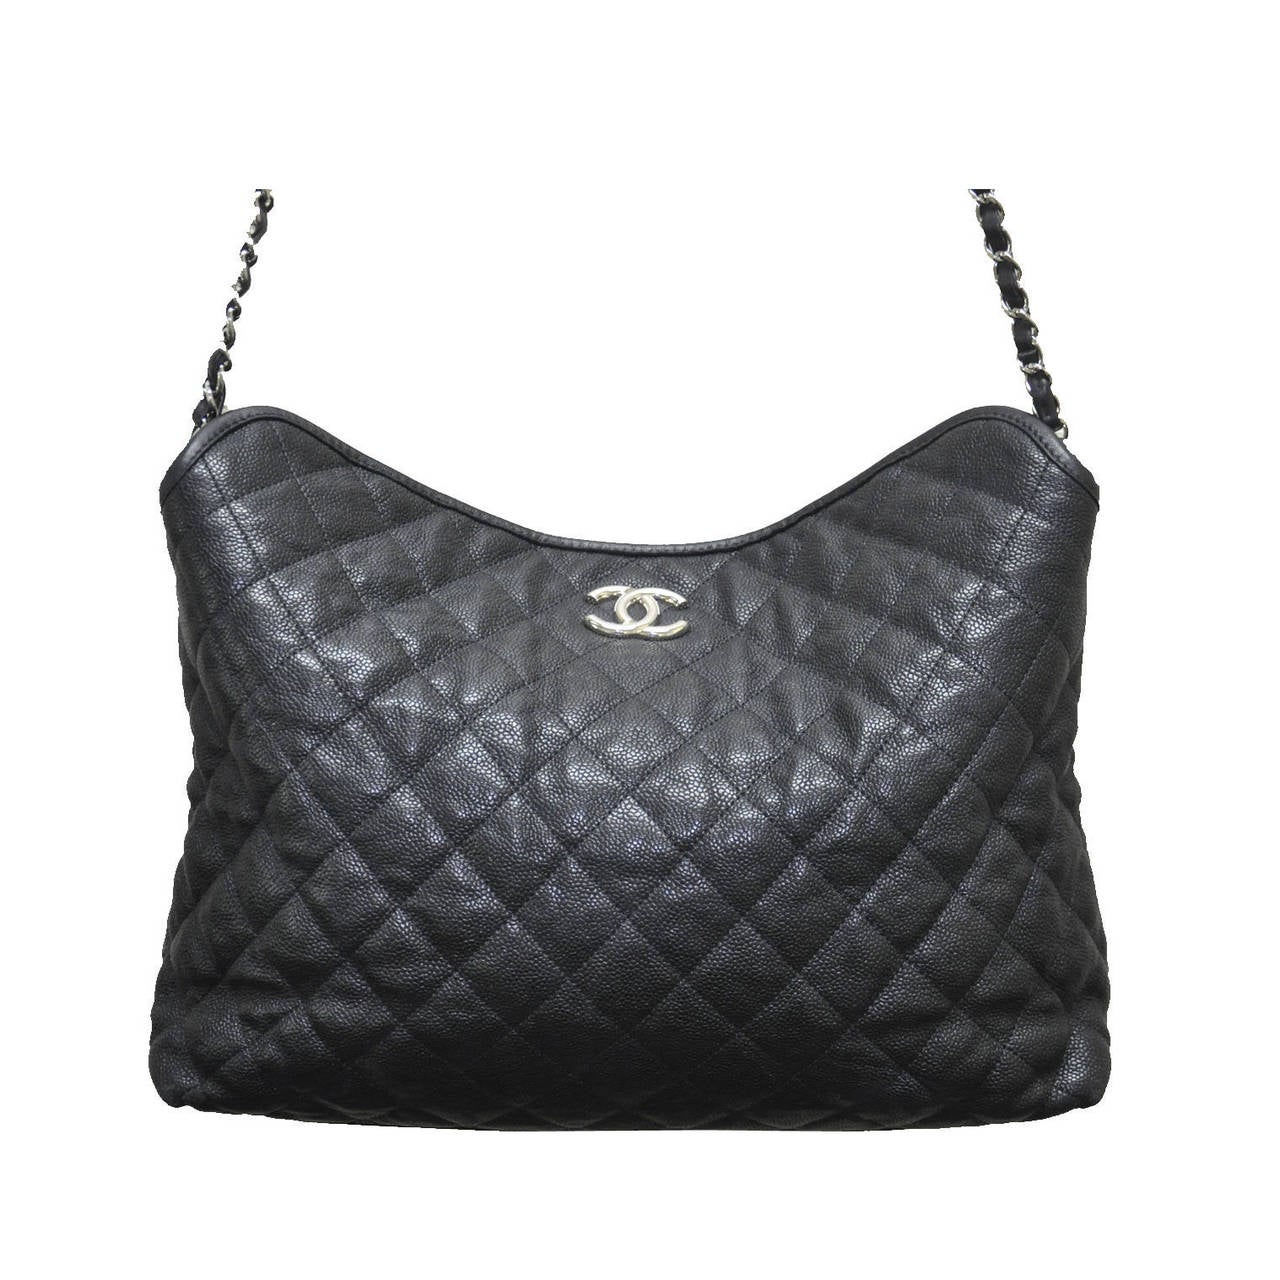 Chanel Black Caviar Leather French Riviera Hobo Shoulder Bag Handbag For Sale